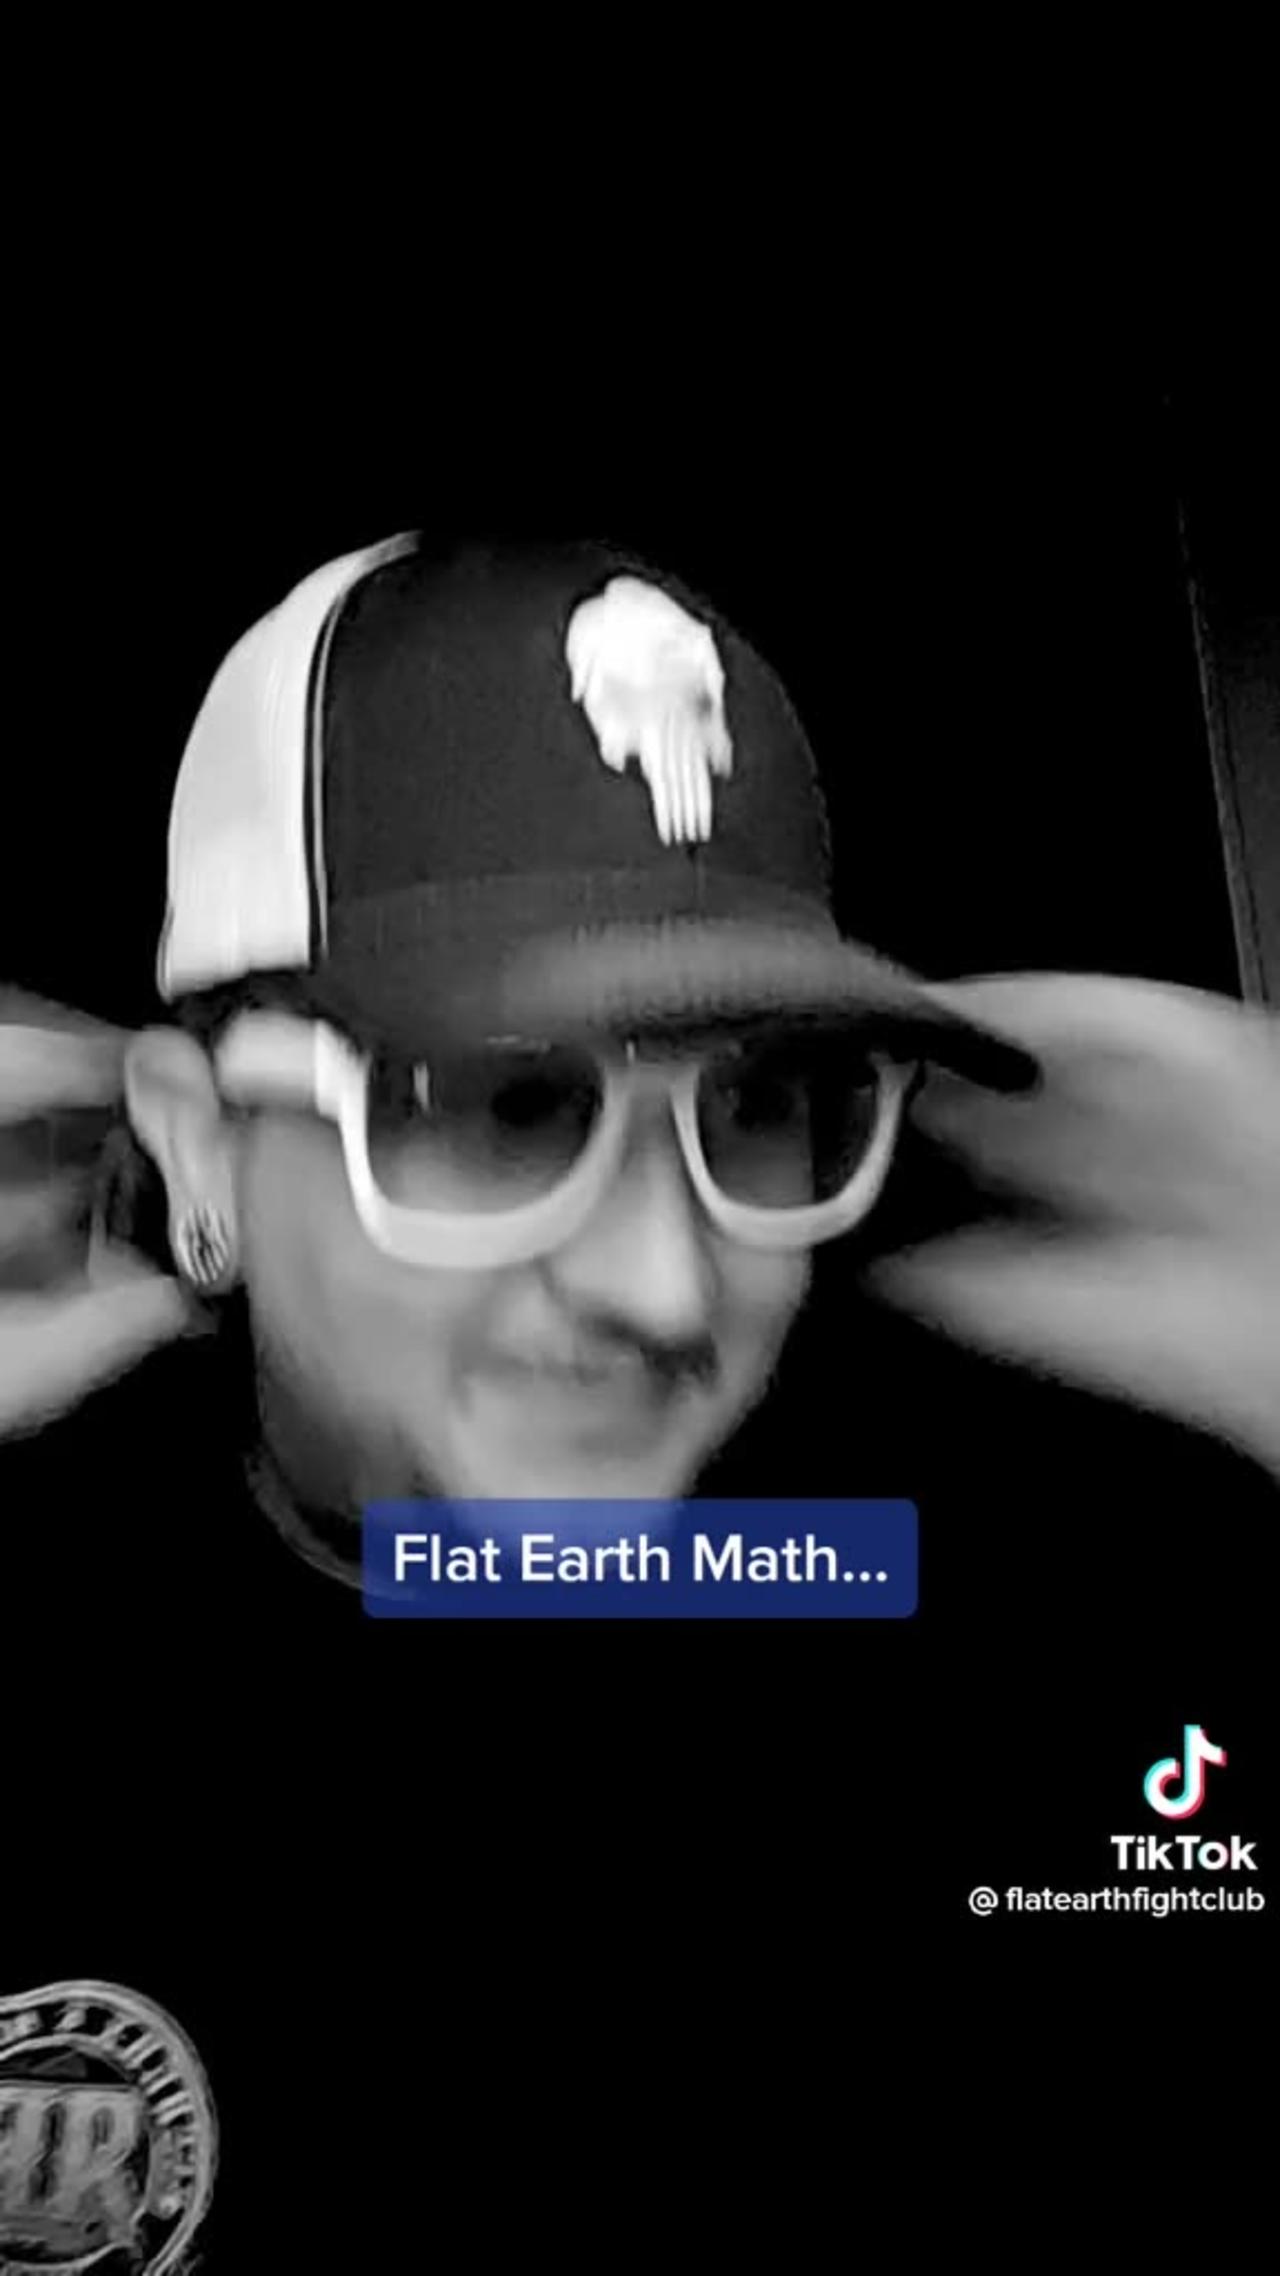 Flat Earth Math - "Flat Earth Fight Club"